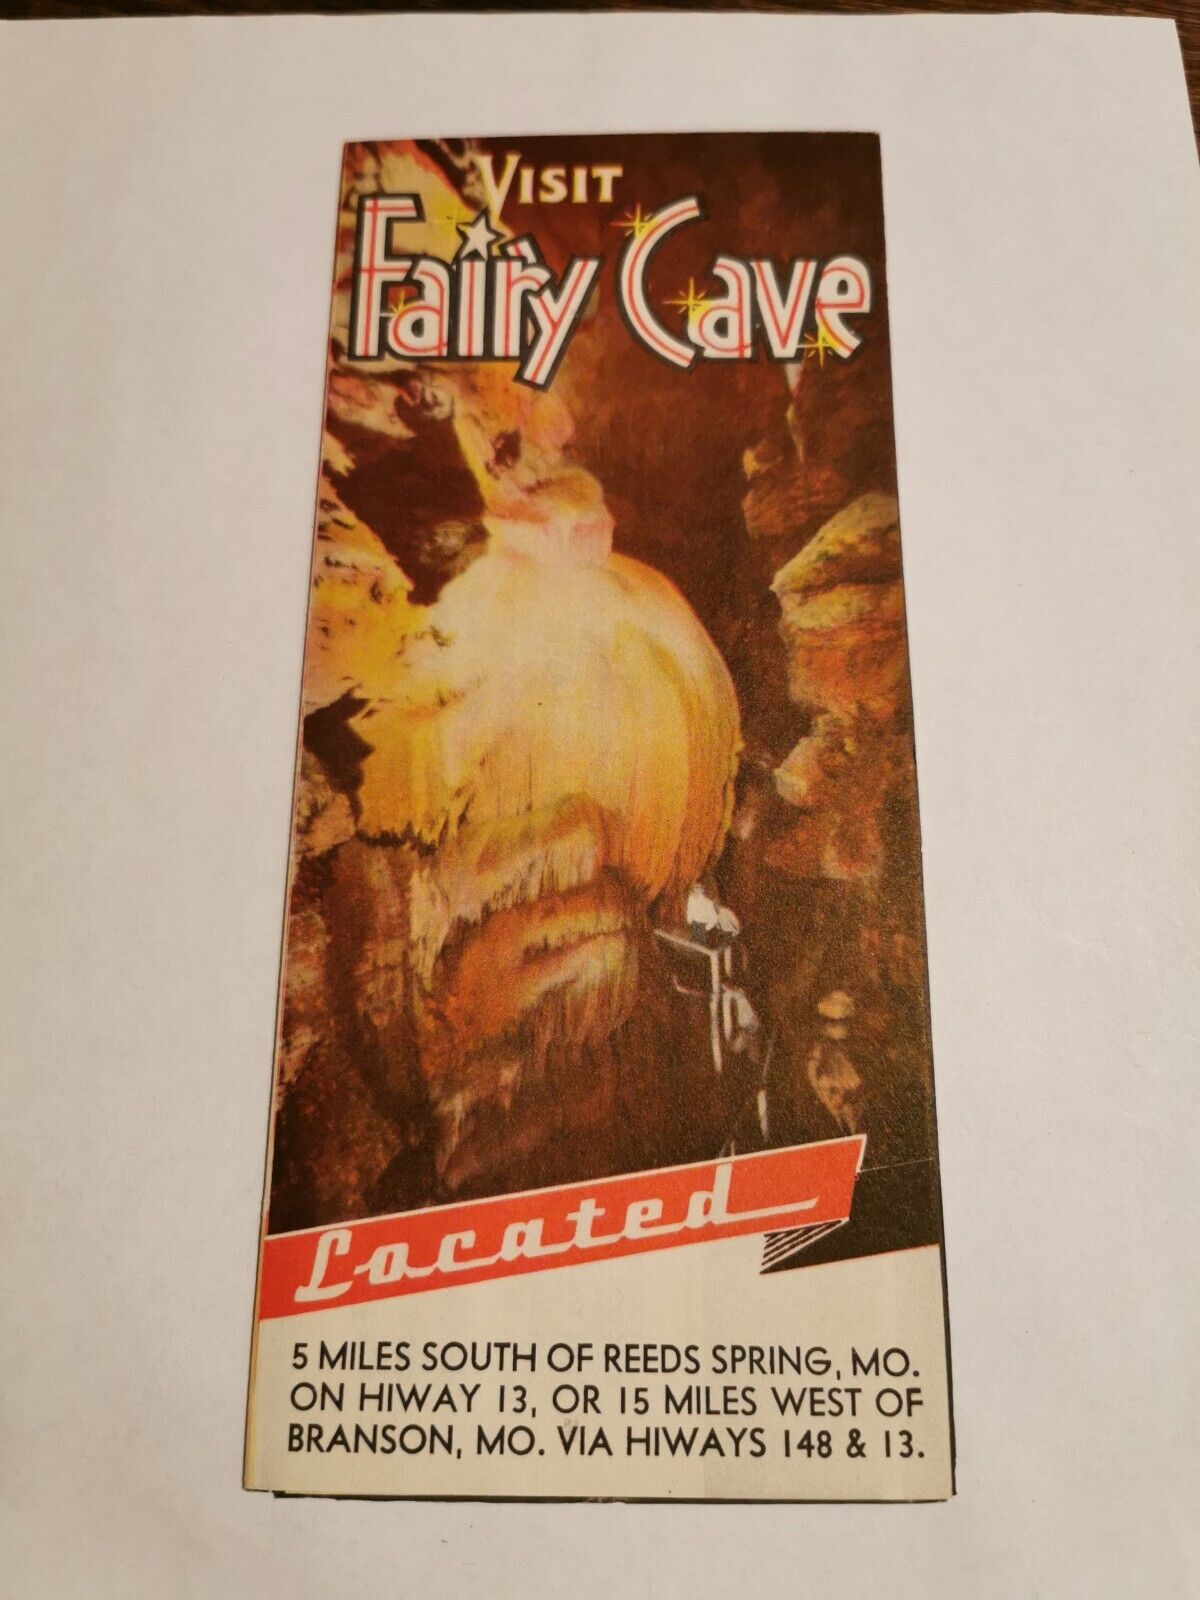 Vintage 1950s Fairy Cave, Branson Missouri Brochure